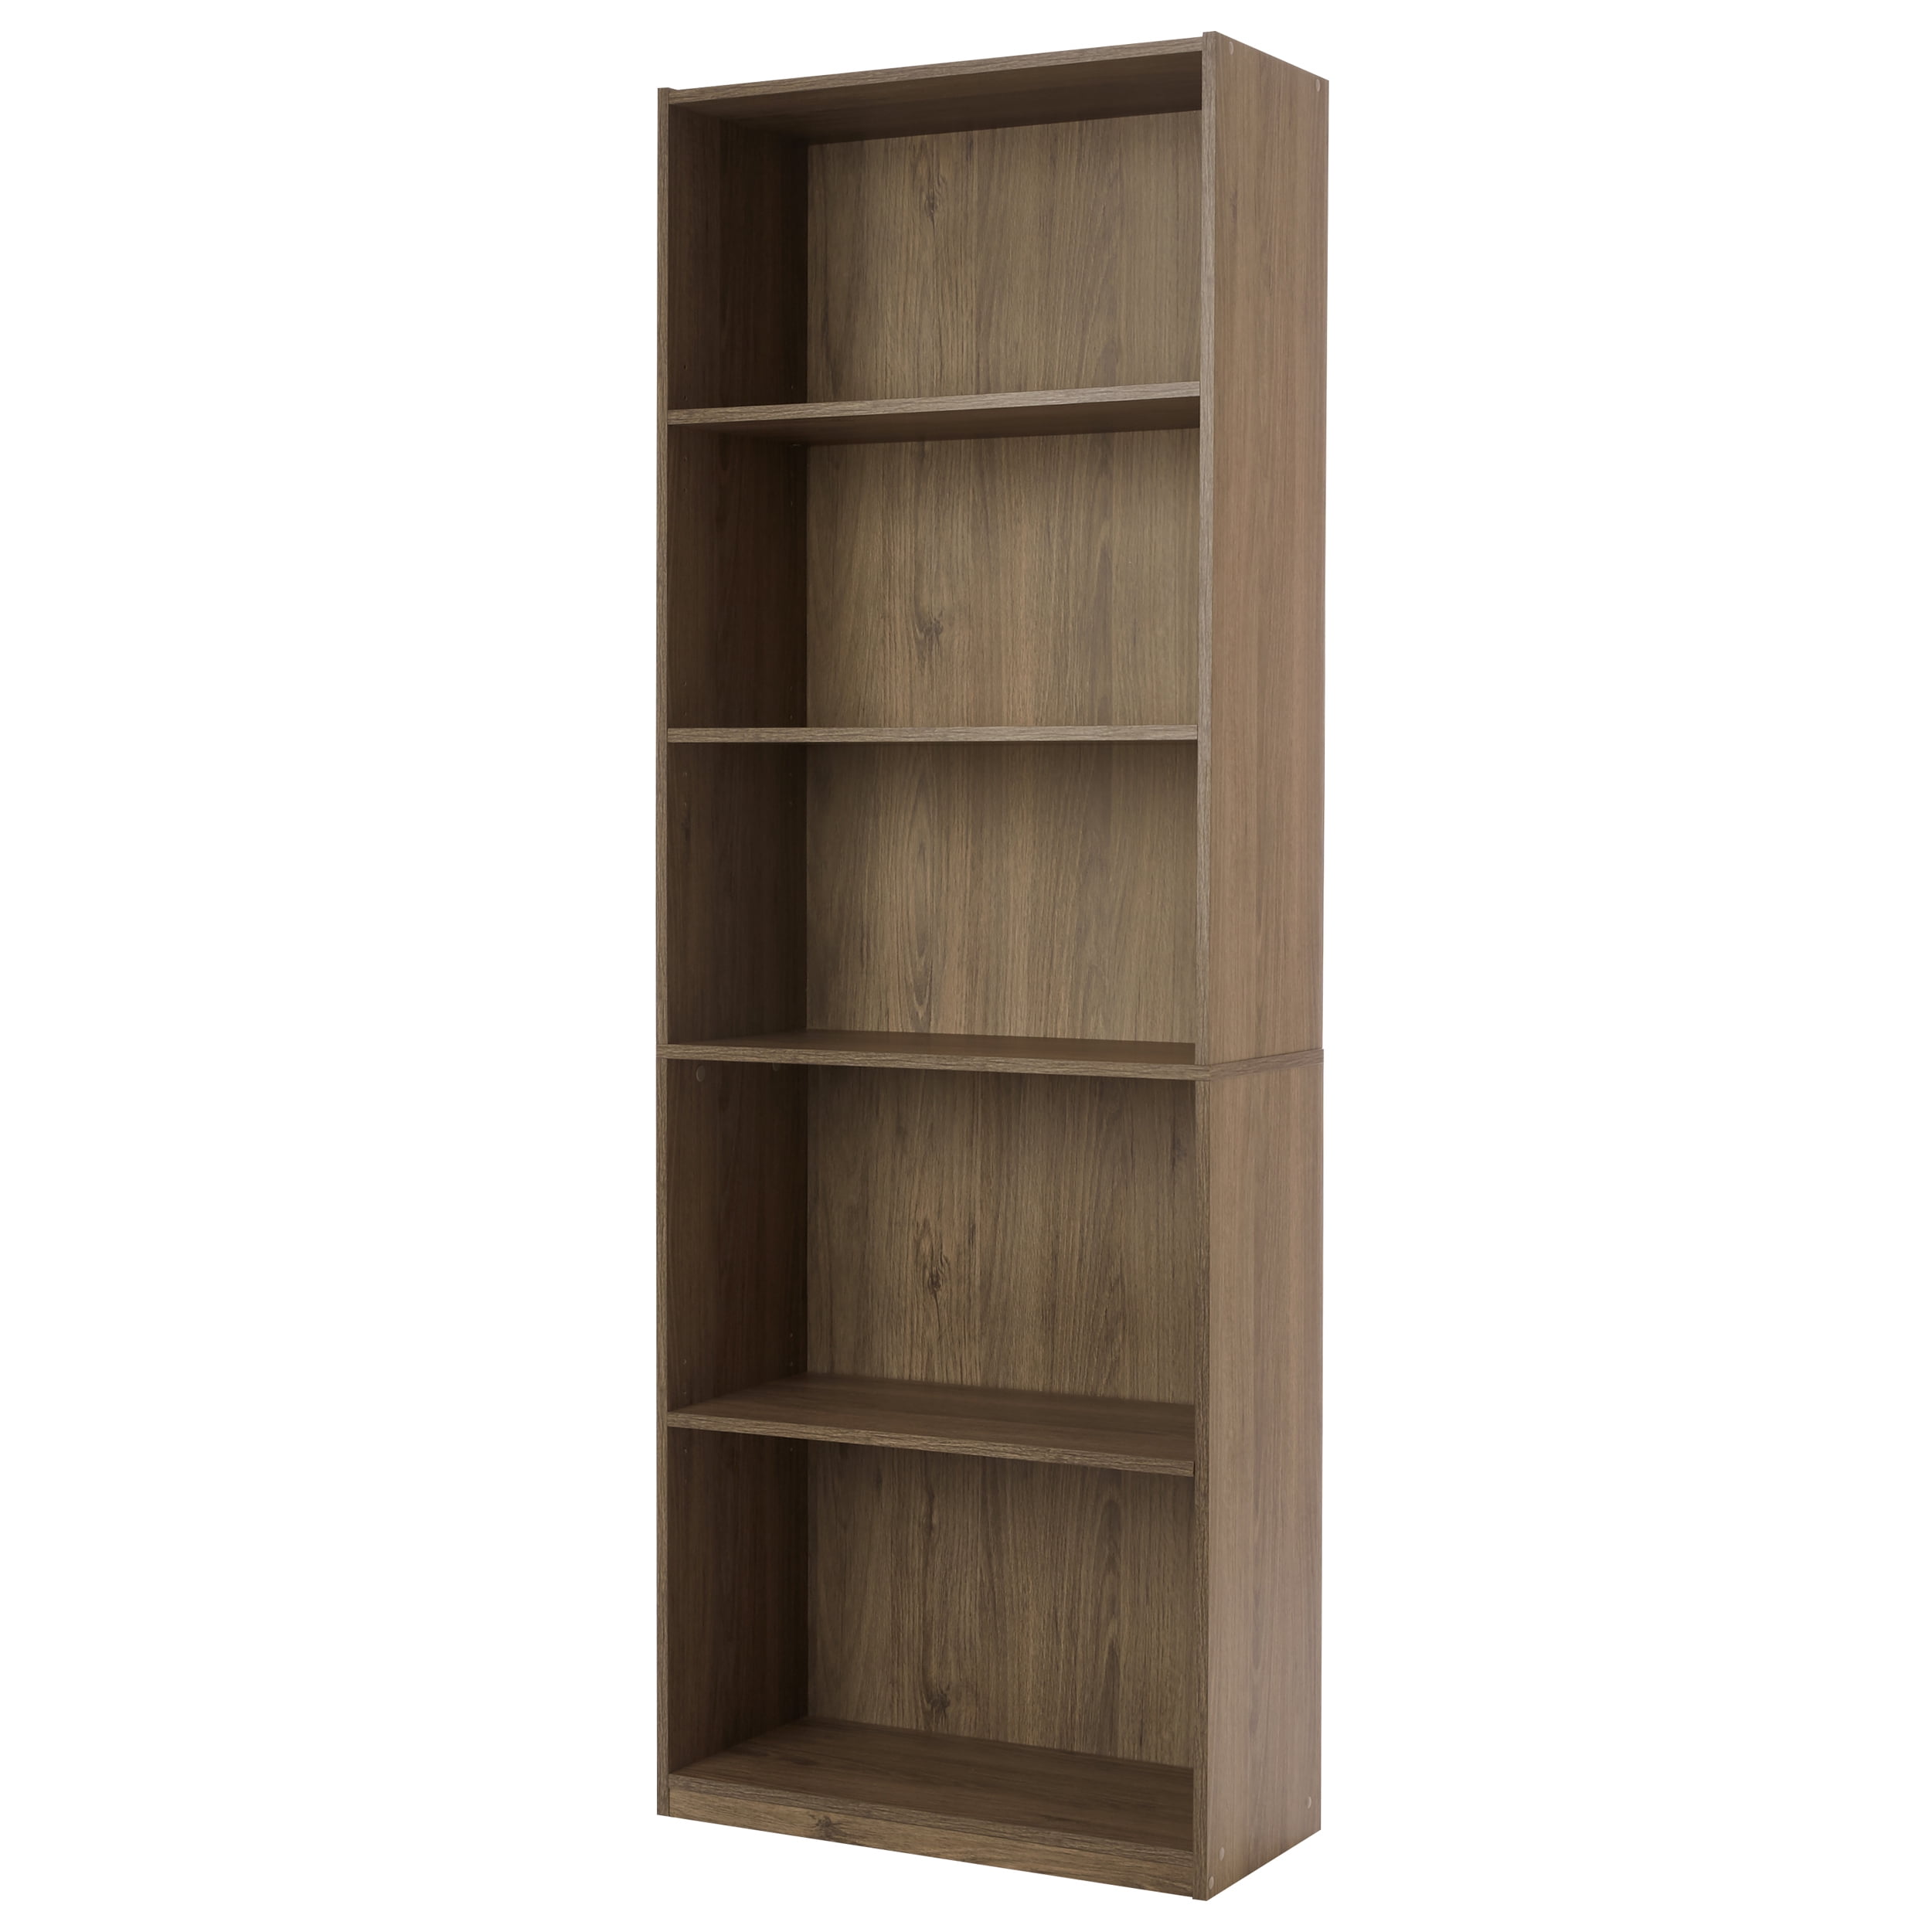 Mainstays 71" 5-Shelf Bookcase with Adjustable Shelves, Rustic Oak